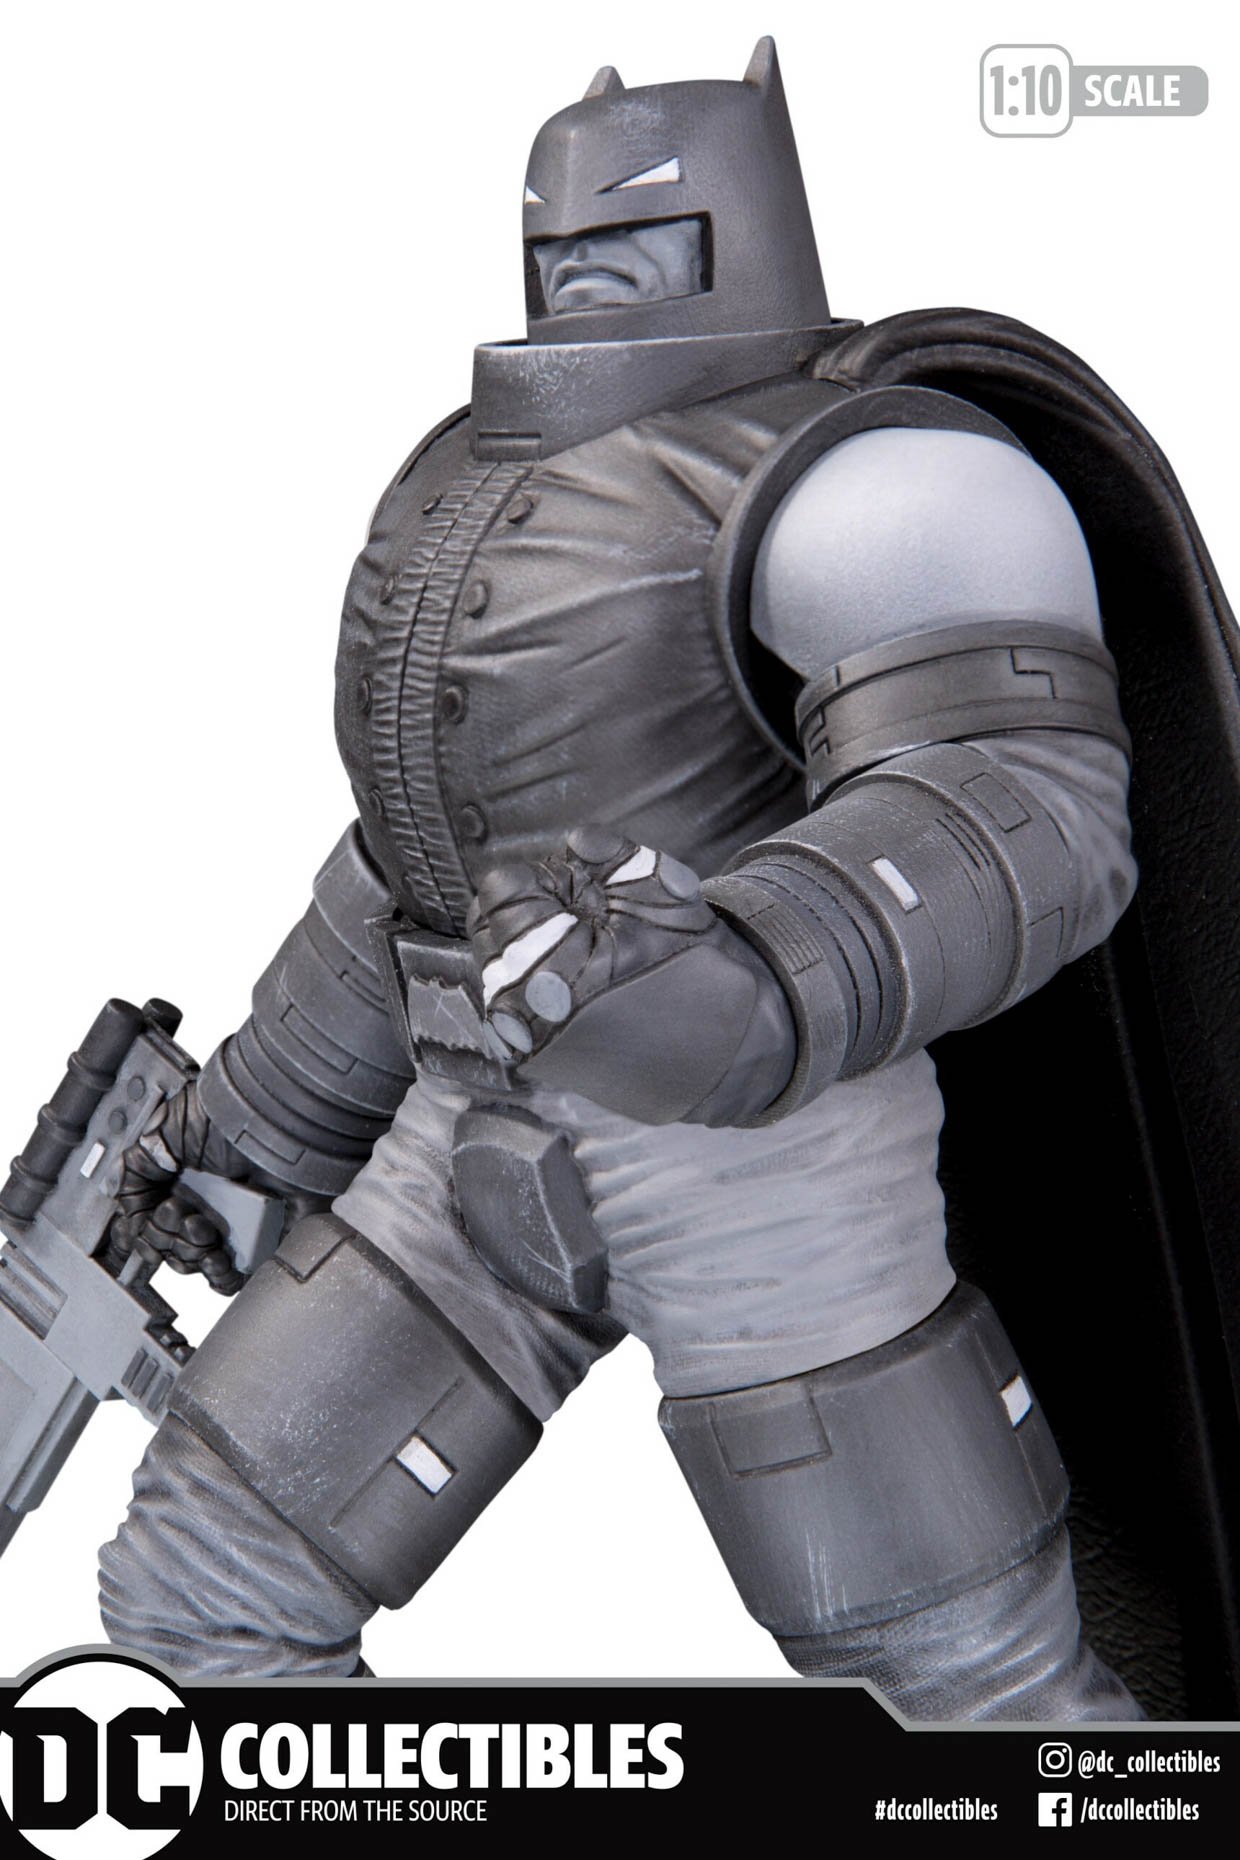 Armored Black and White Batman Statue